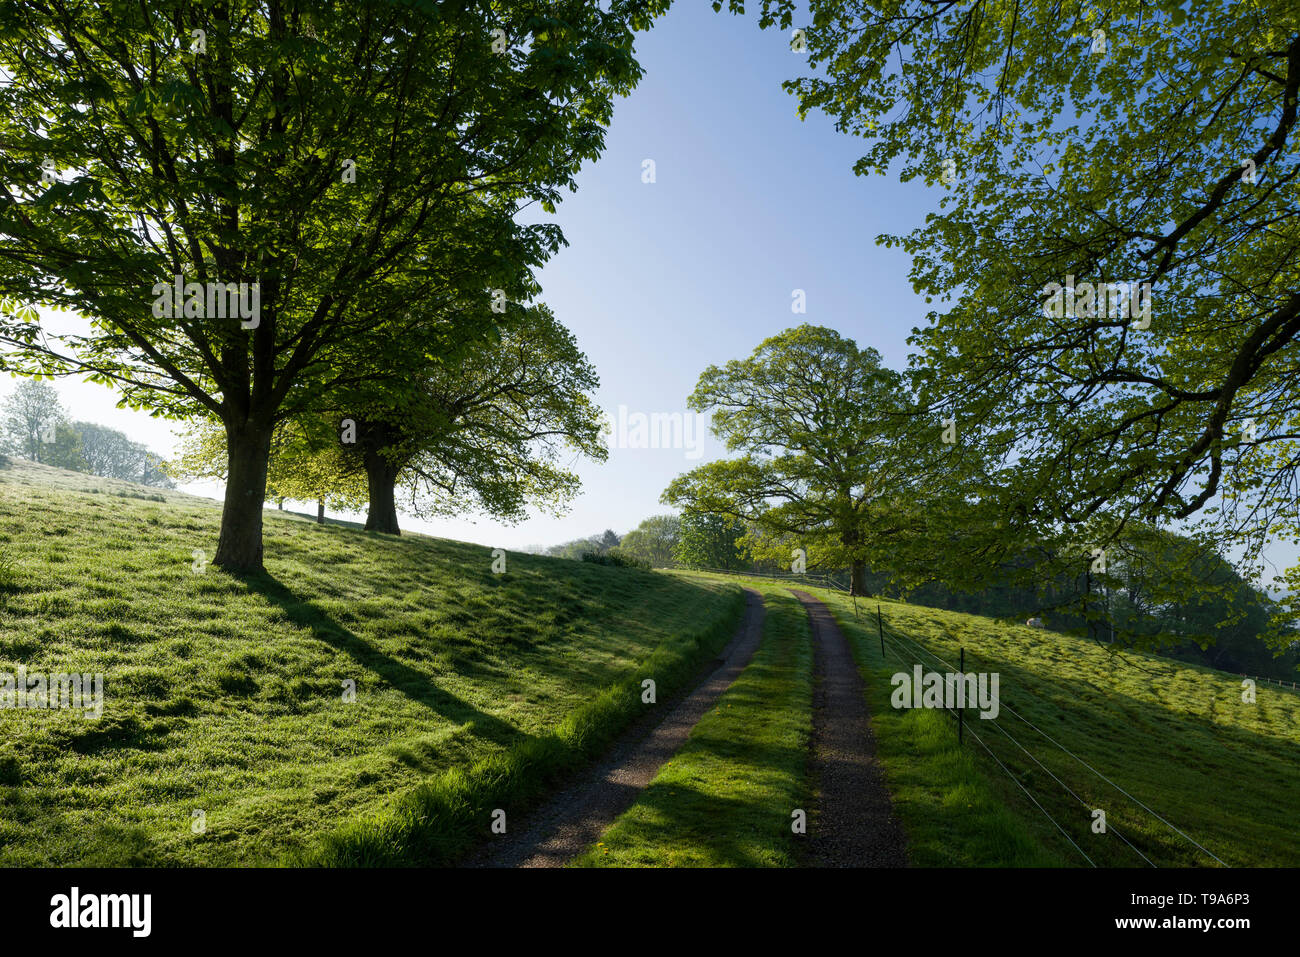 Morgen Lujiang in der Landschaft am Alten Hügel in der Nähe Wrington, North Somerset, England. Stockfoto